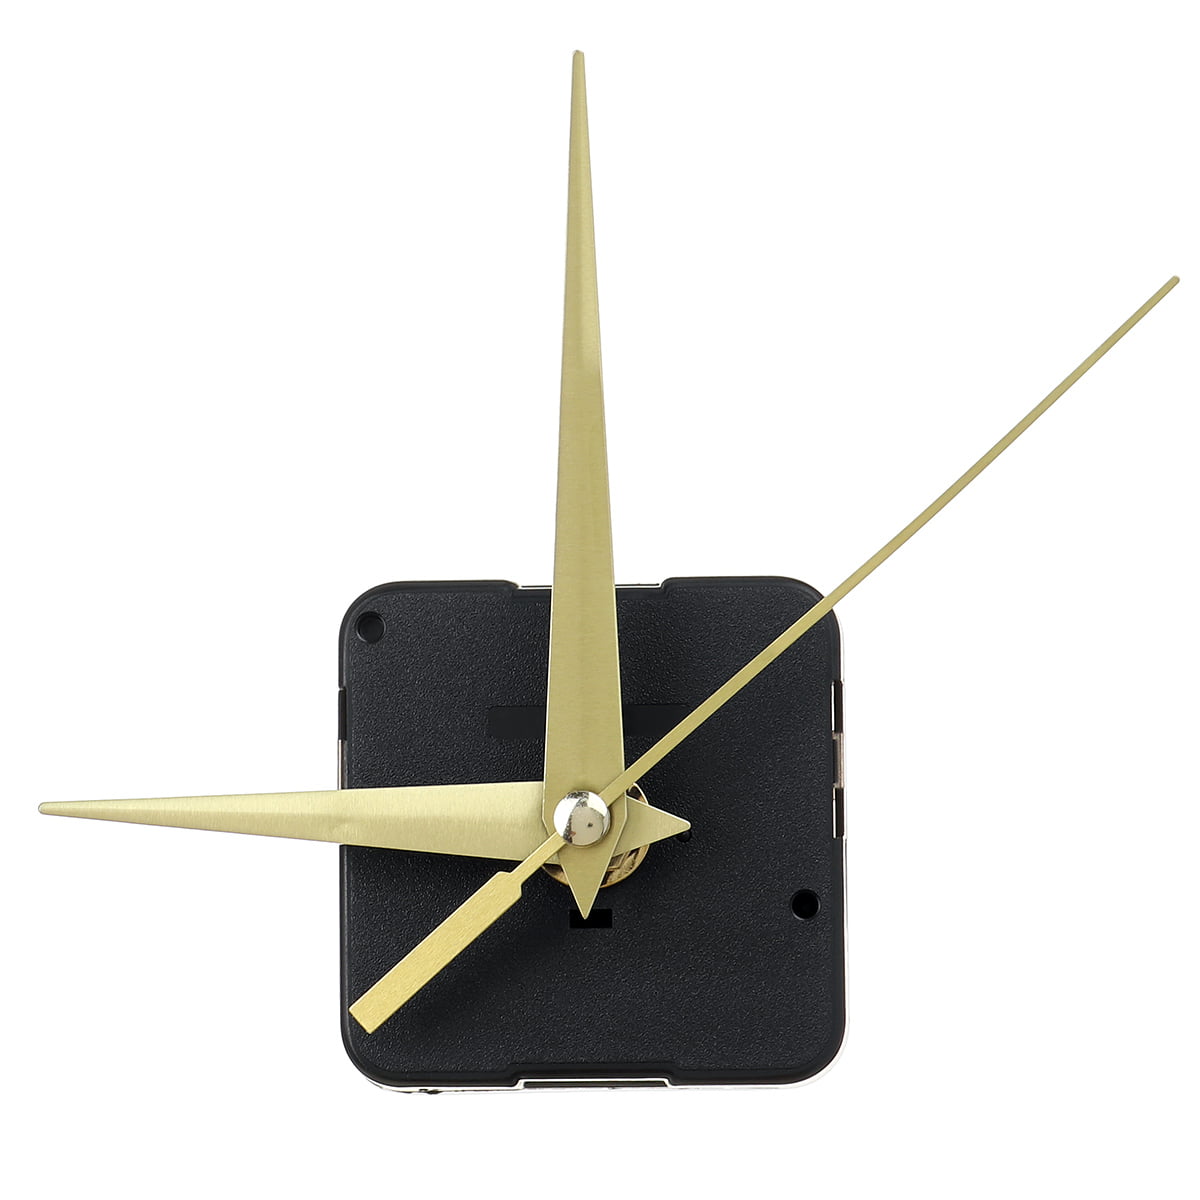 Hands Quartz DIY Wall Clock Movement Mechanism Battery Operated Spindle Part Kit 